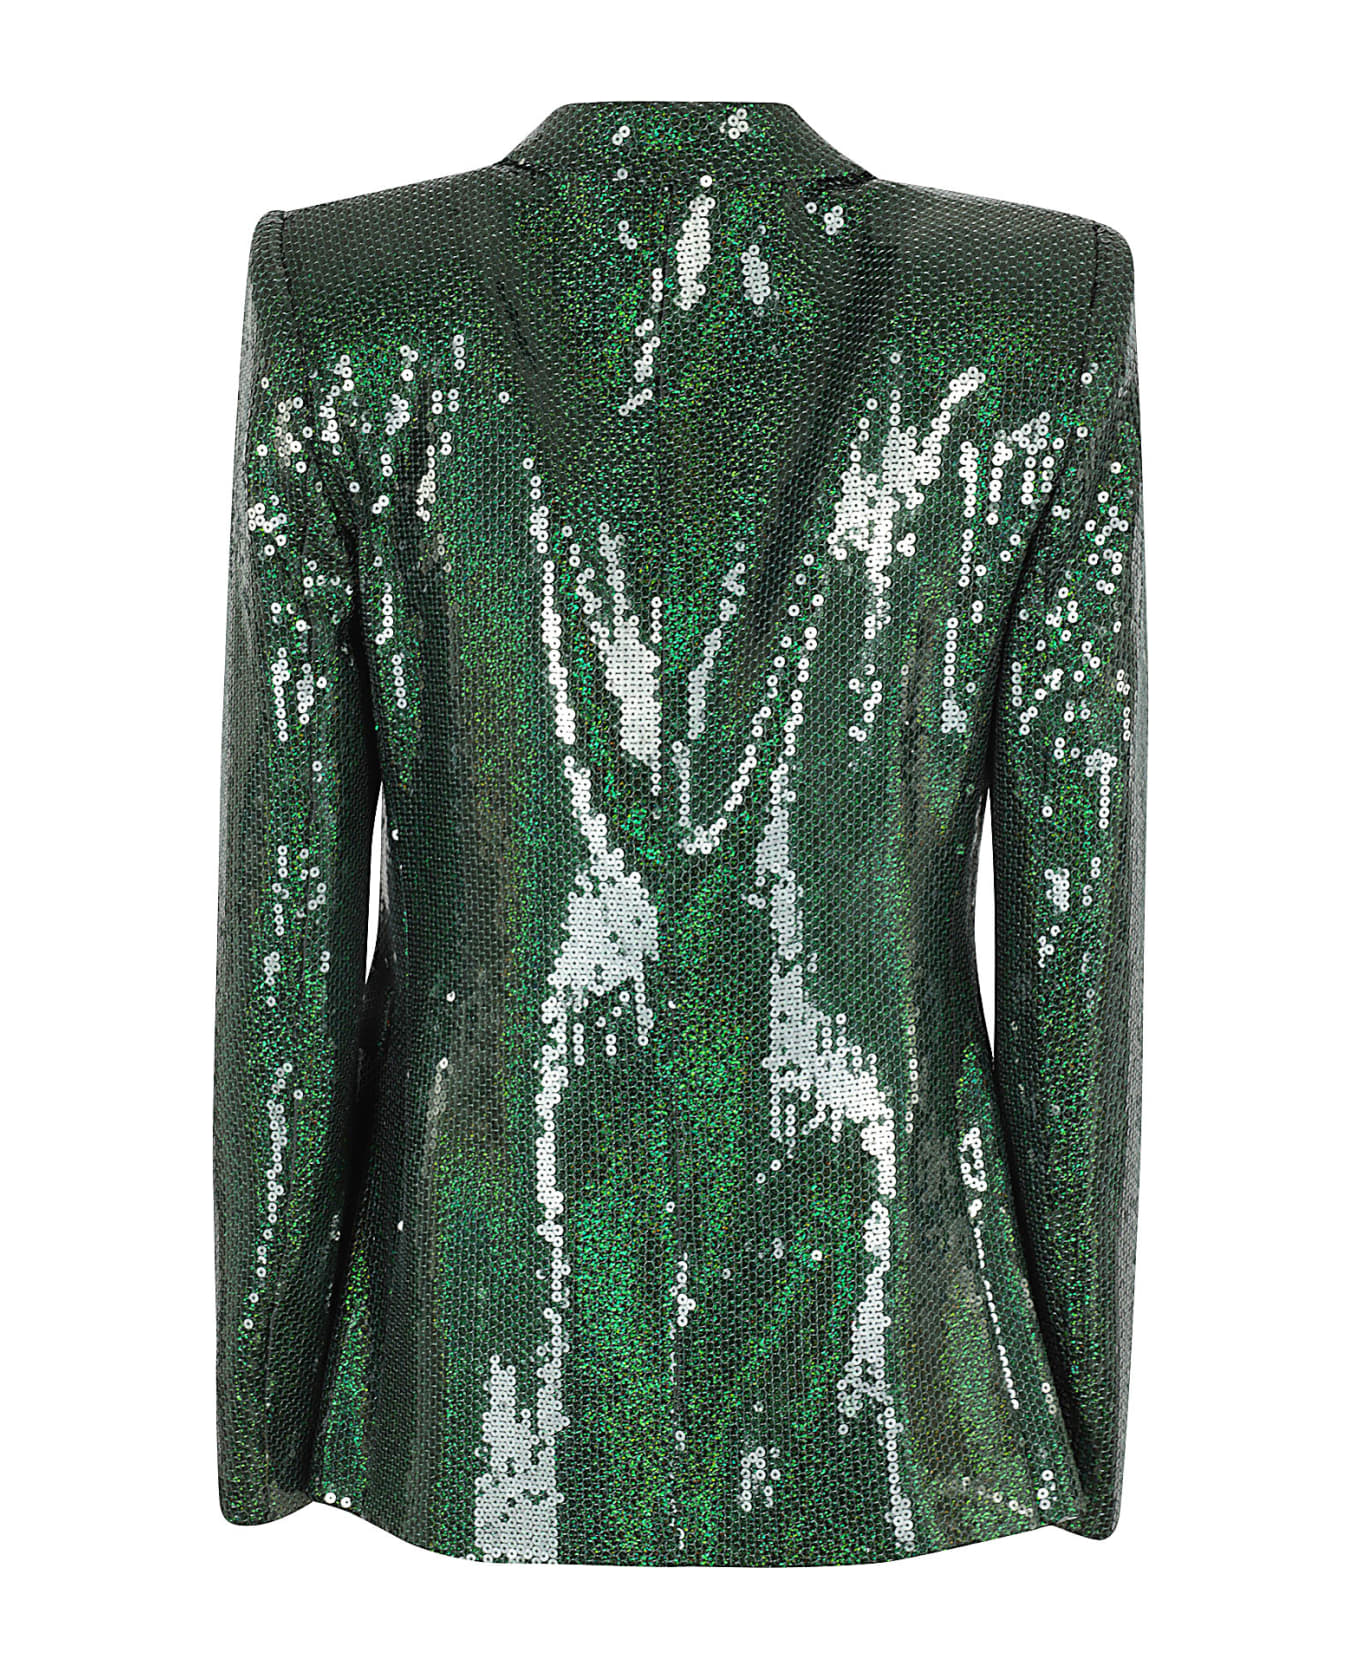 Bcbg Max Azria Jacket - Vf Emerald Green